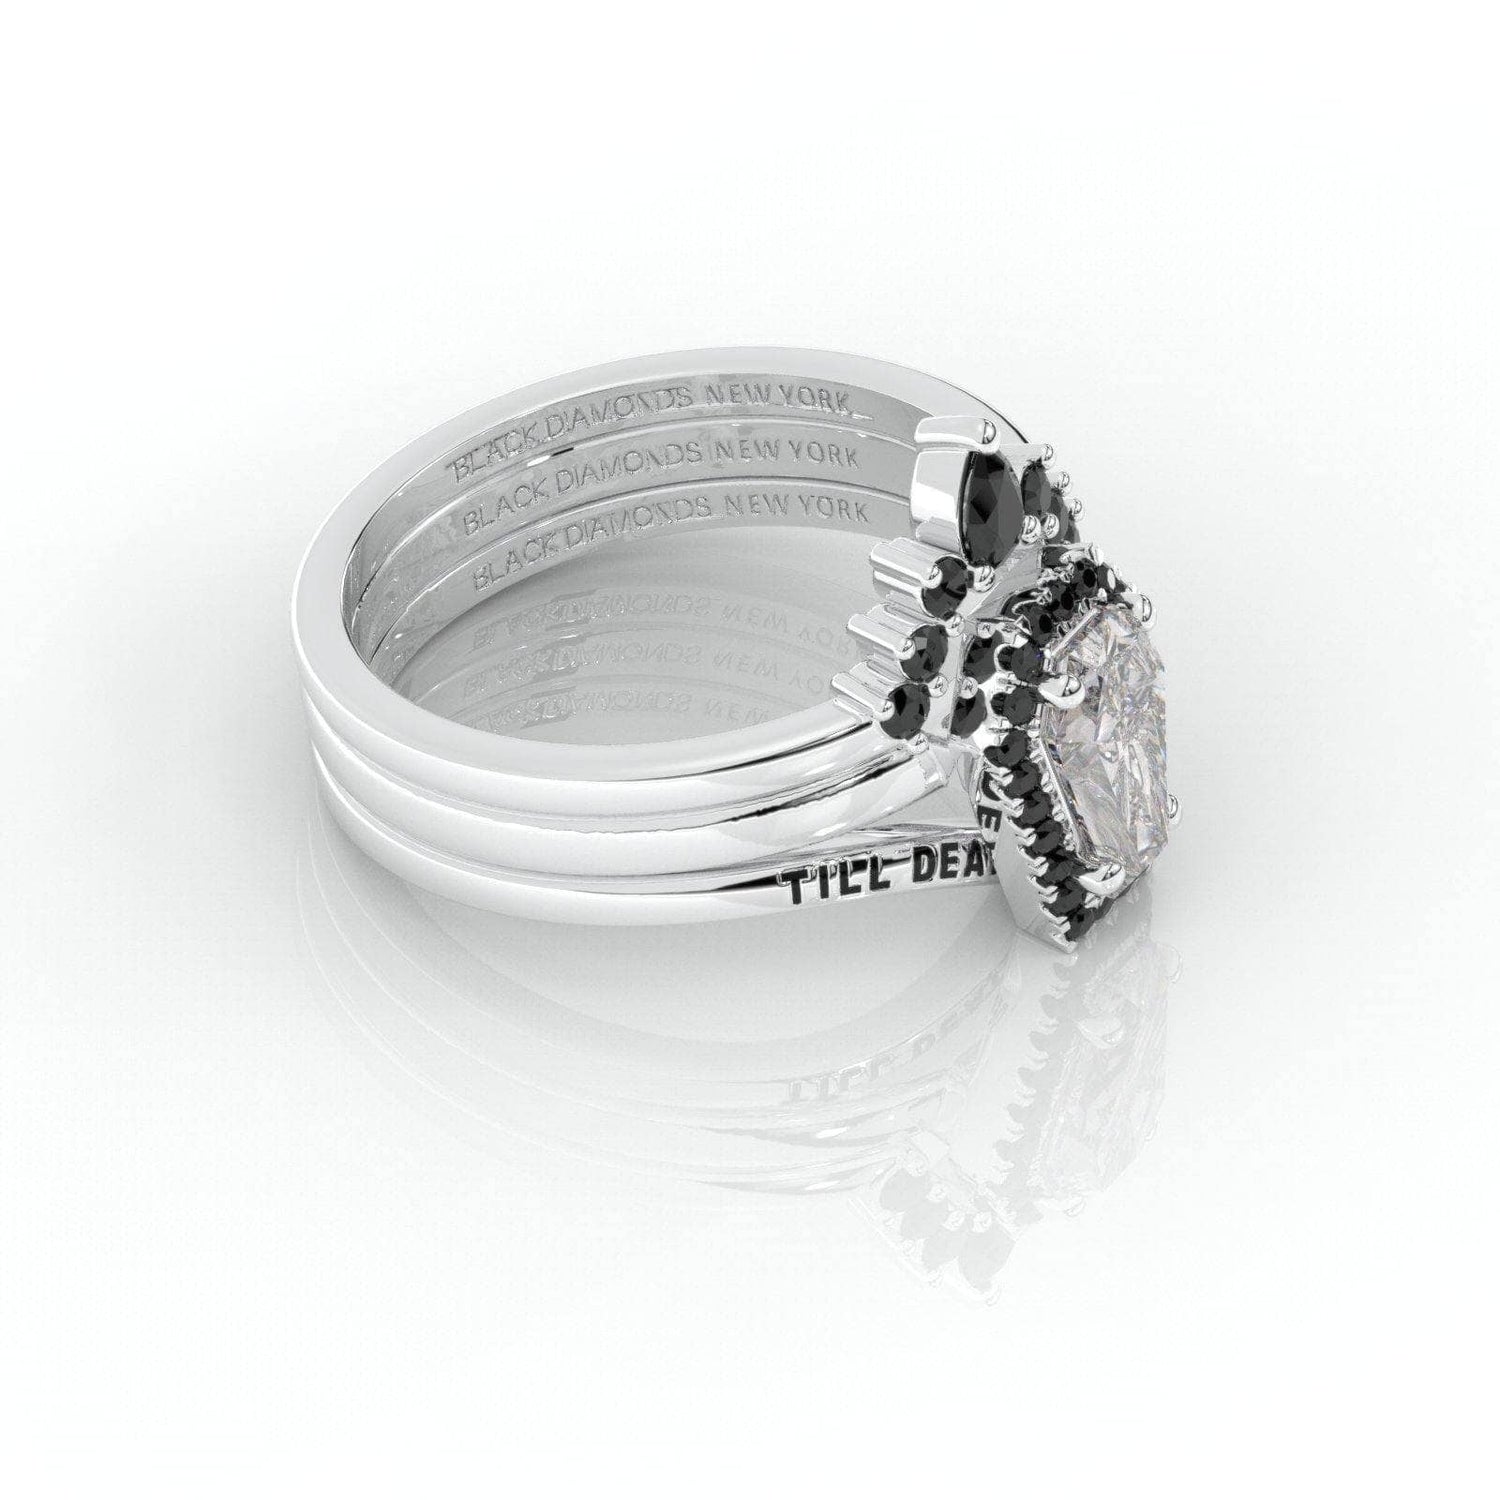 VIP AC Dream Ring Upgrade-Black Diamonds New York